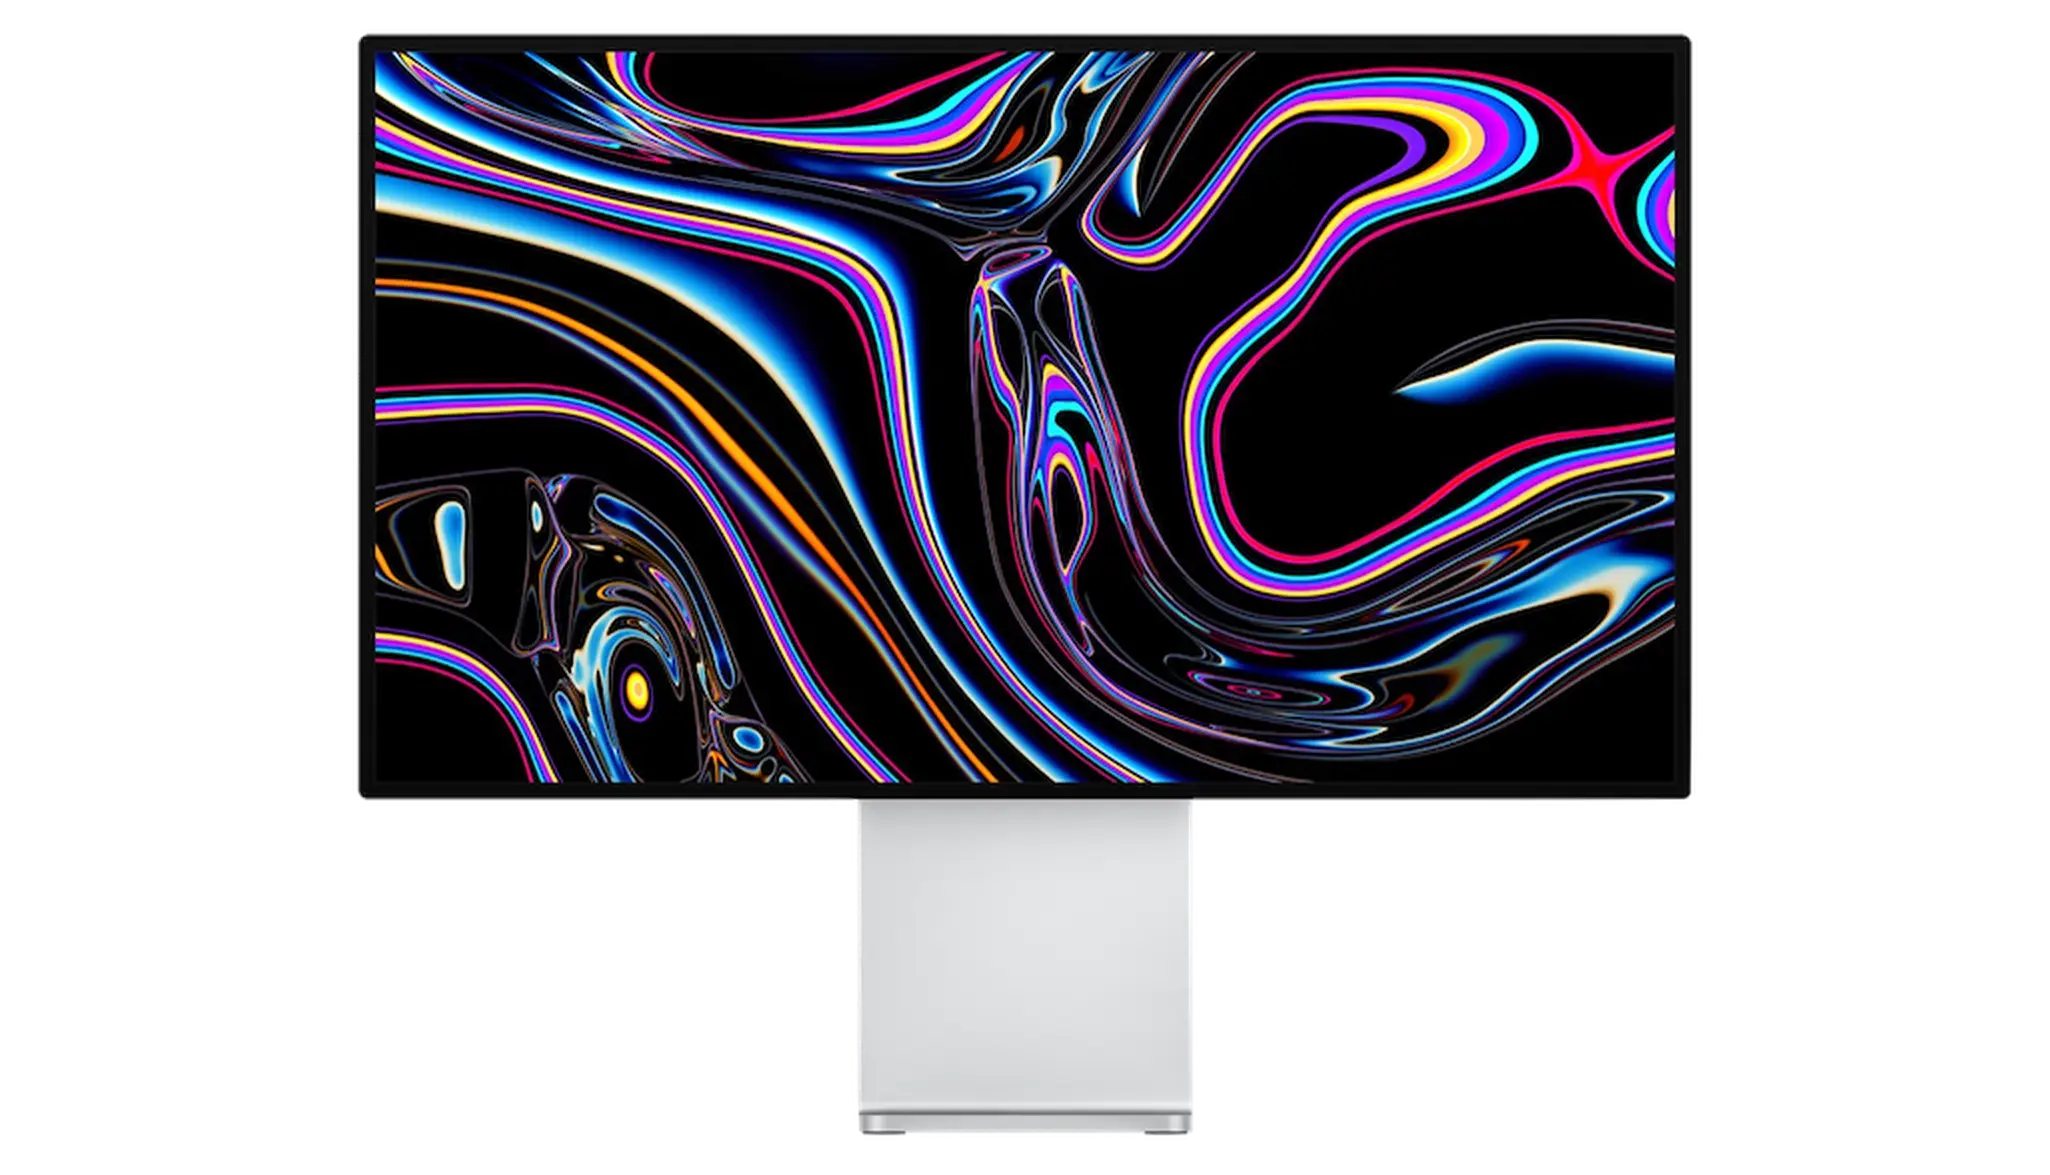 Apple Pro Display XDR med fargerikt mønster på skjermen